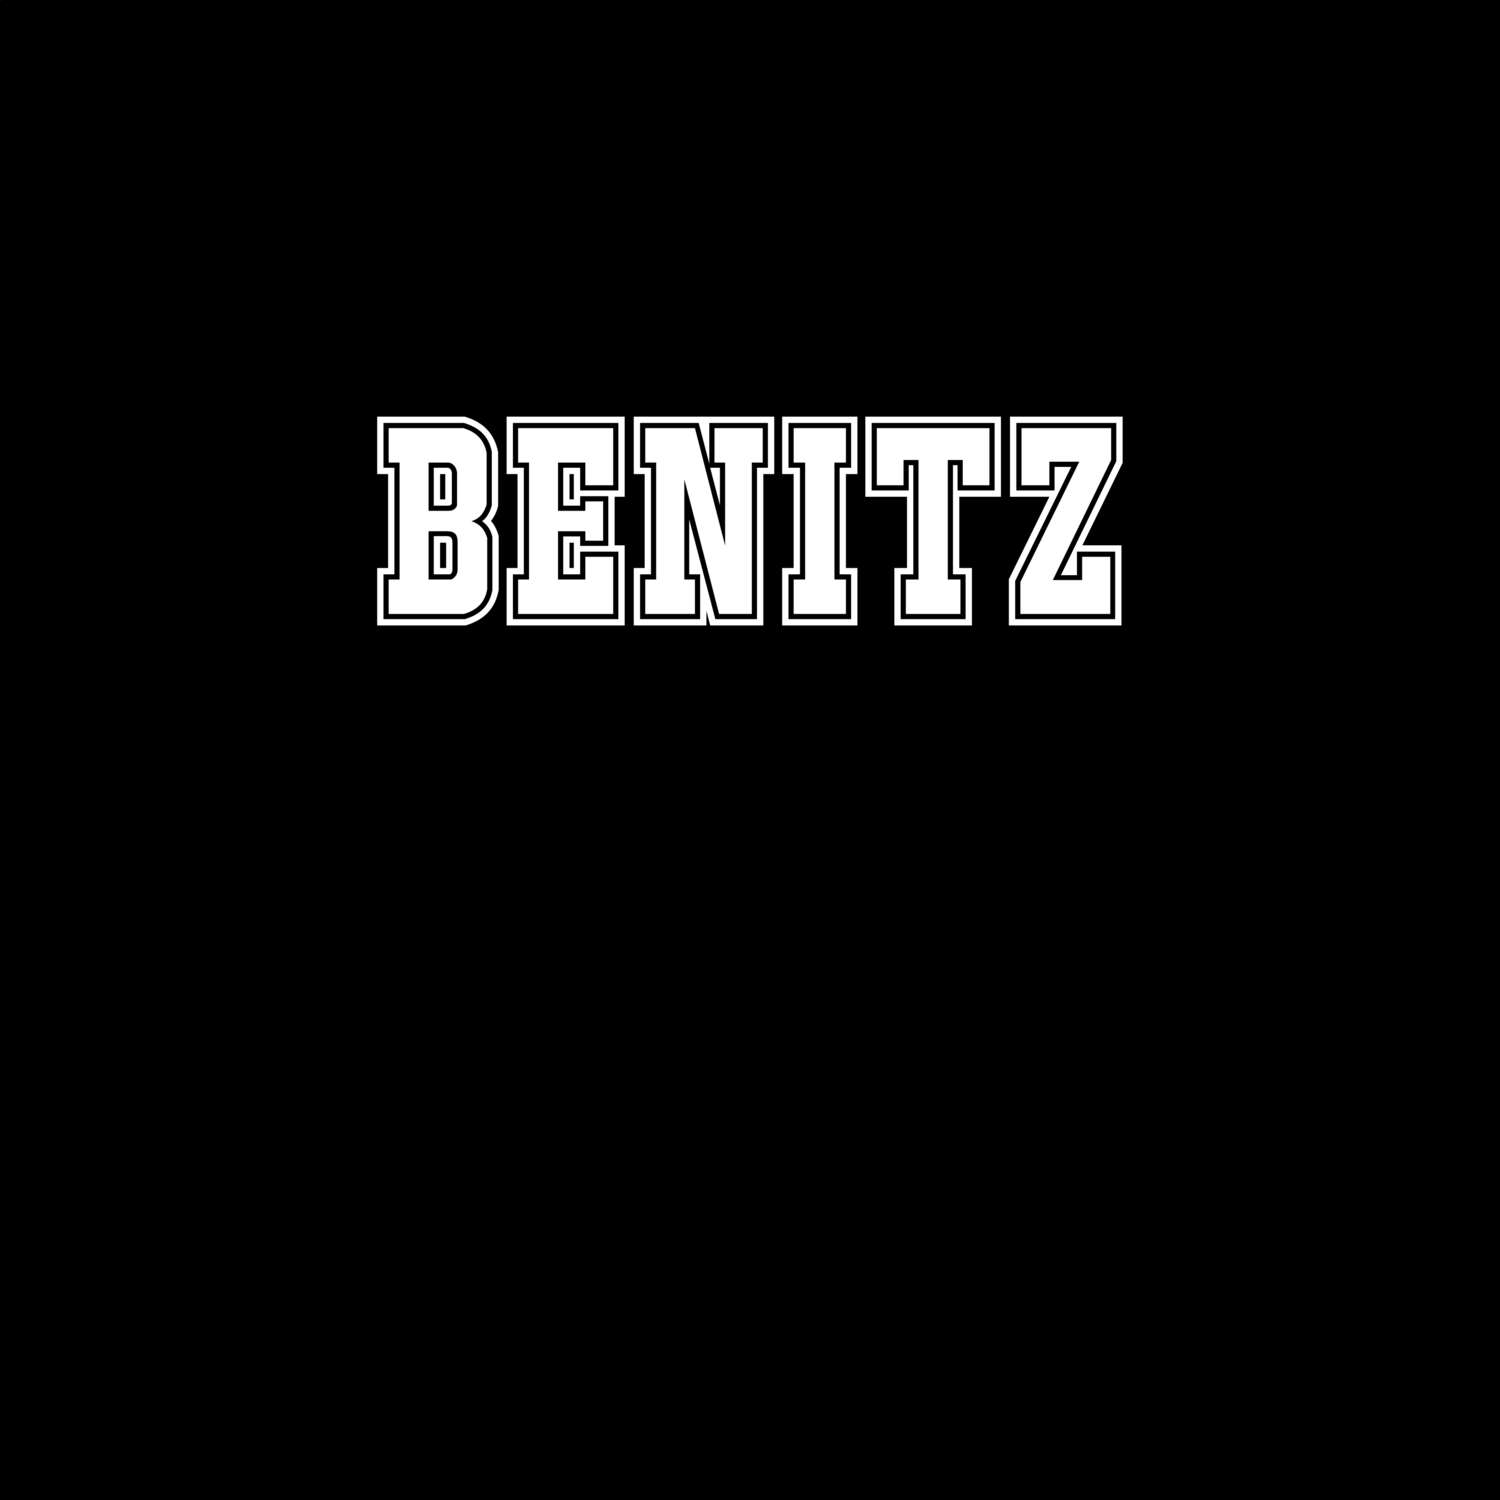 Benitz T-Shirt »Classic«